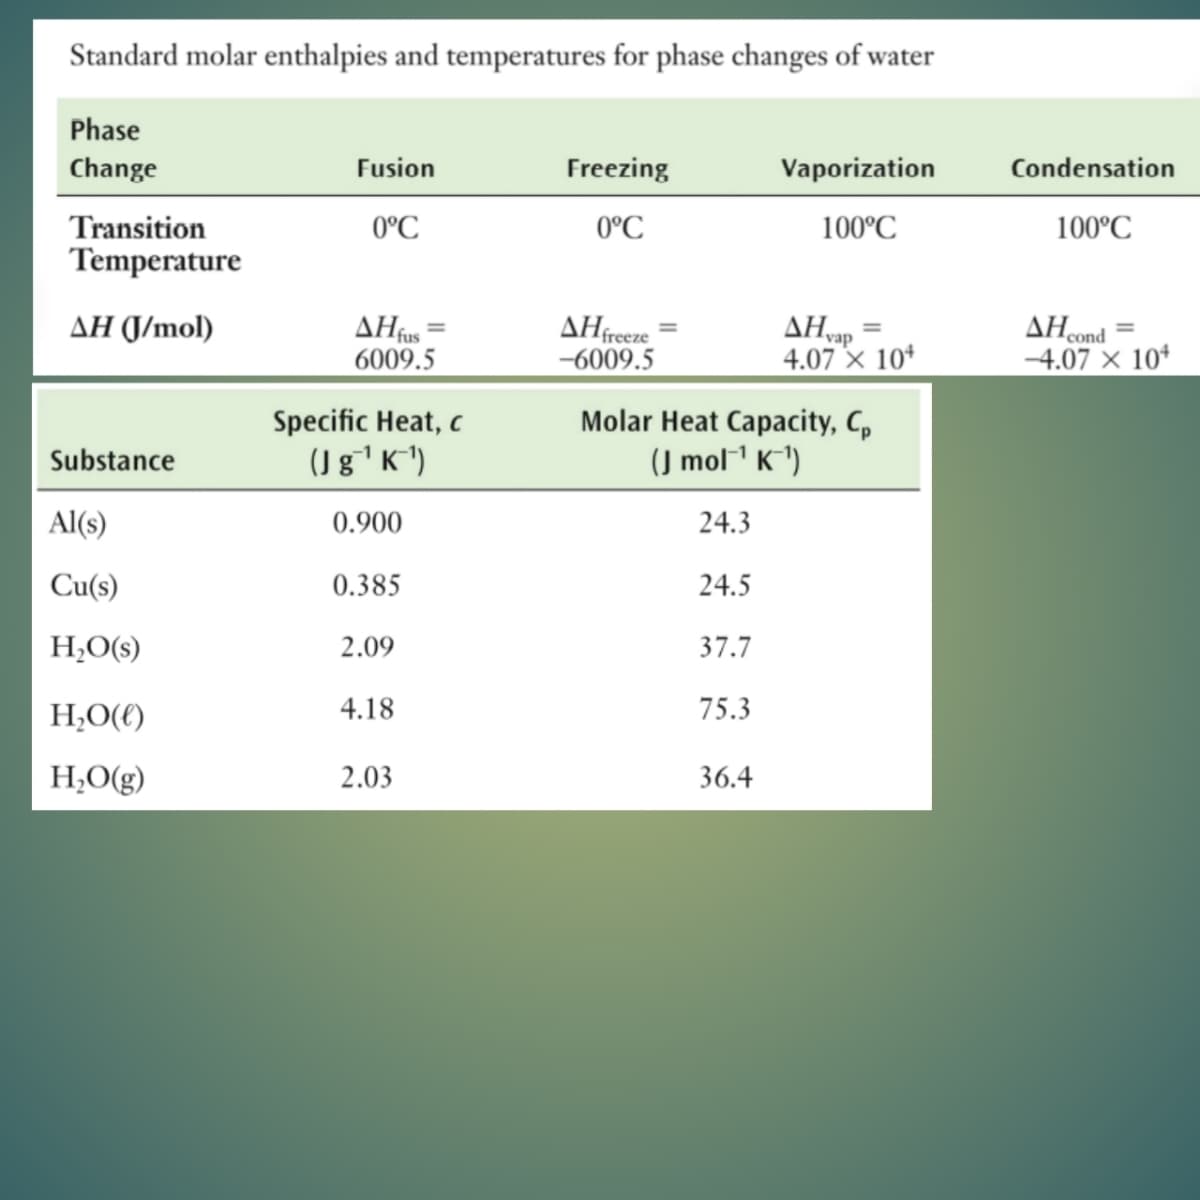 Standard molar enthalpies and temperatures for phase changes of water
Phase
Change
Fusion
Freezing
Vaporization
Condensation
Transition
0°C
0°C
100°C
100°C
Temperature
ΔΗ
6009.5
AHvap
4.07 × 10*
AHcond
-4.07 × 10*
AH (J/mol)
AHfreeze
-6009.5
Specific Heat, c
(Jg'K*)
Molar Heat Capacity, C,
(J mol1 K^1)
Substance
Al(s)
0.900
24.3
Cu(s)
0.385
24.5
H;O(s)
2.09
37.7
H,O(()
4.18
75.3
H;O(g)
2.03
36.4
